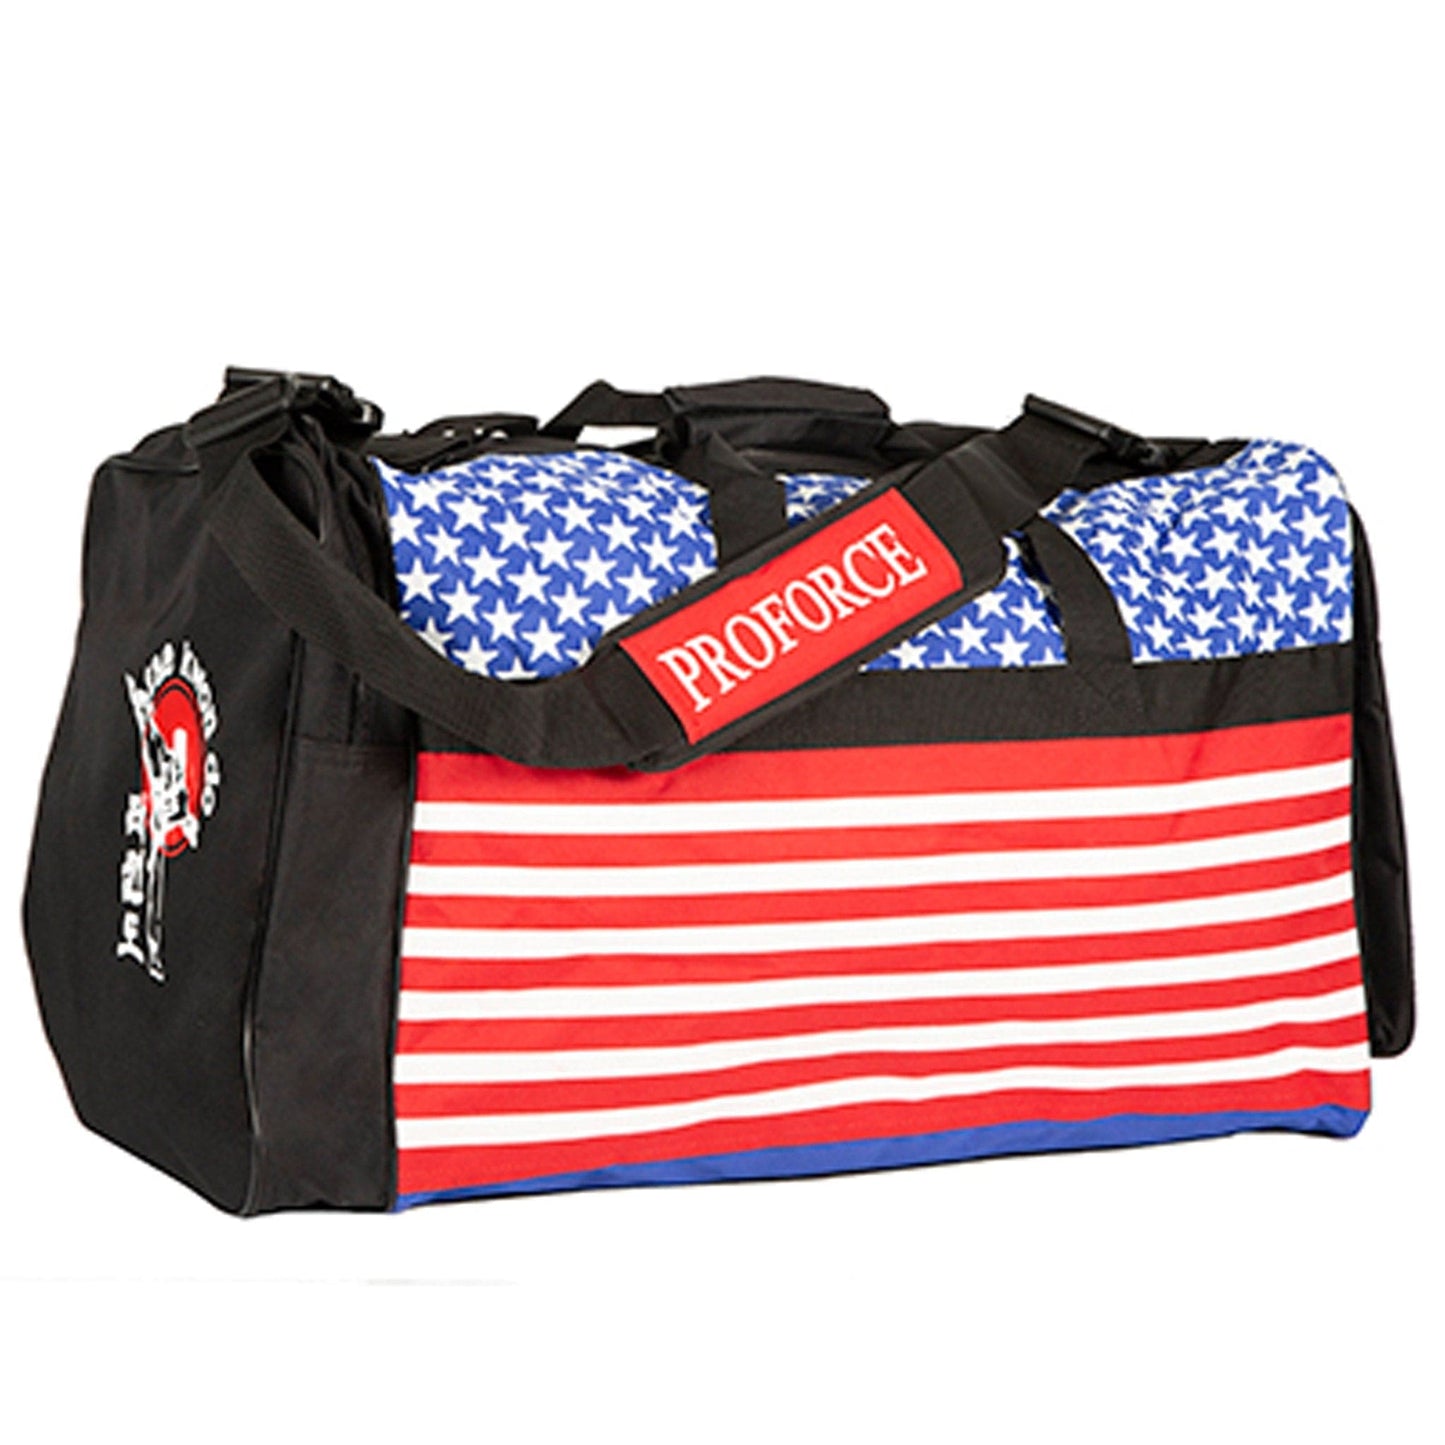 ProForce Sparring Gear ProForce USA Duffel martial arts bag